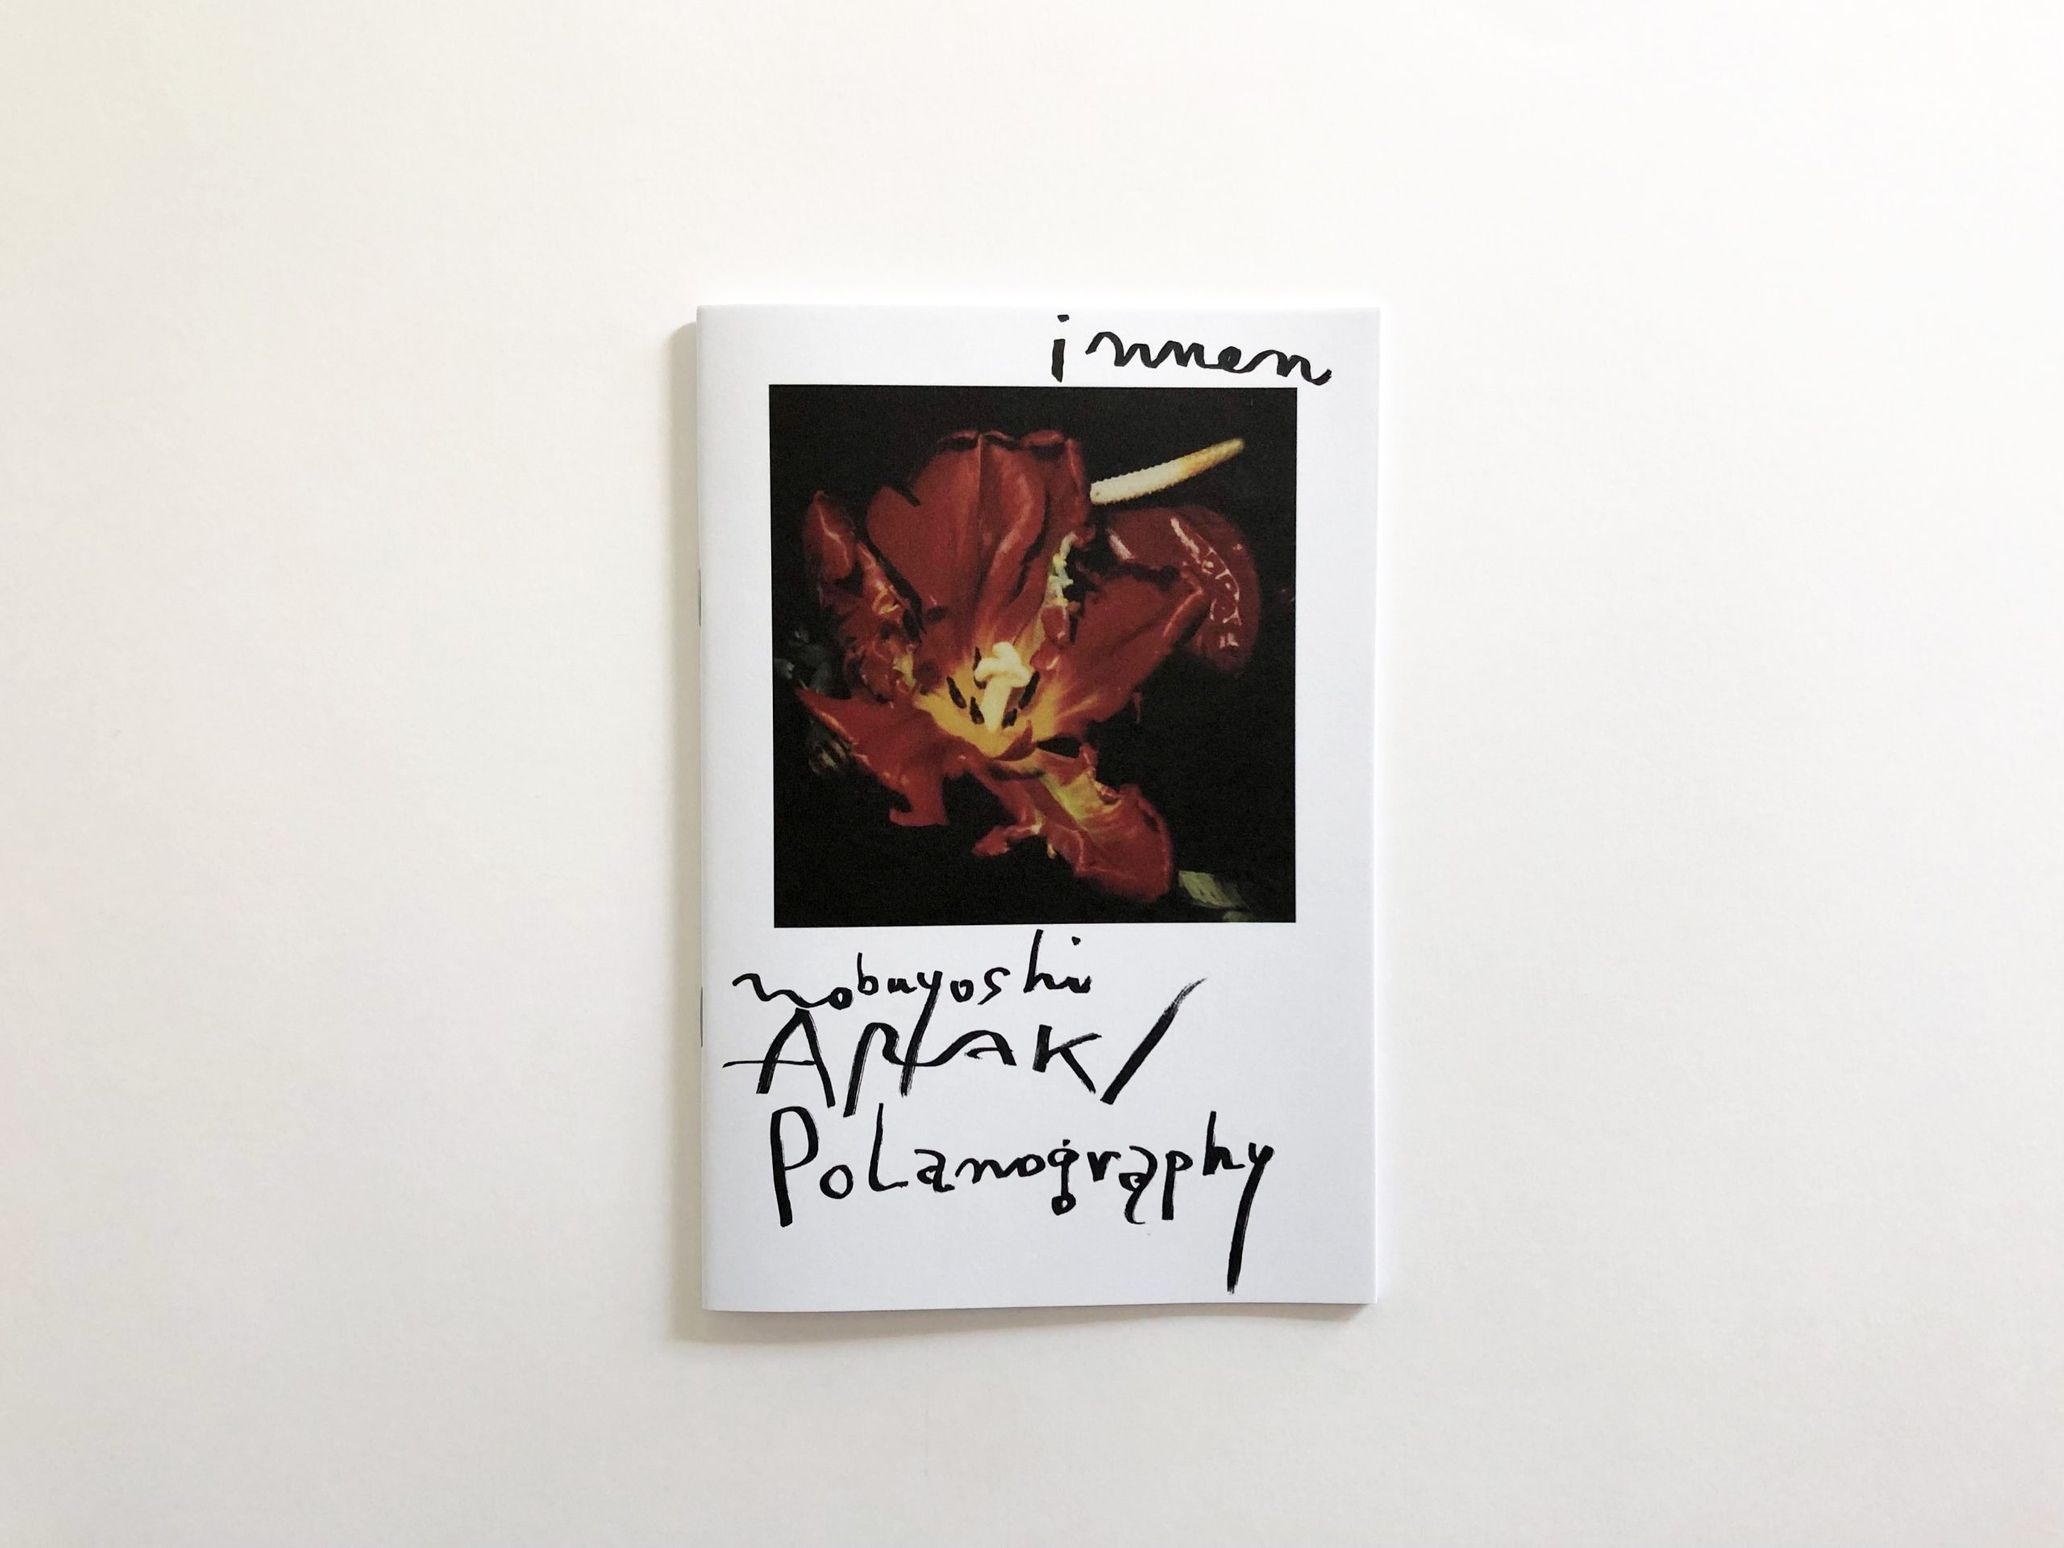 Nobuyoshi Araki, Polanography